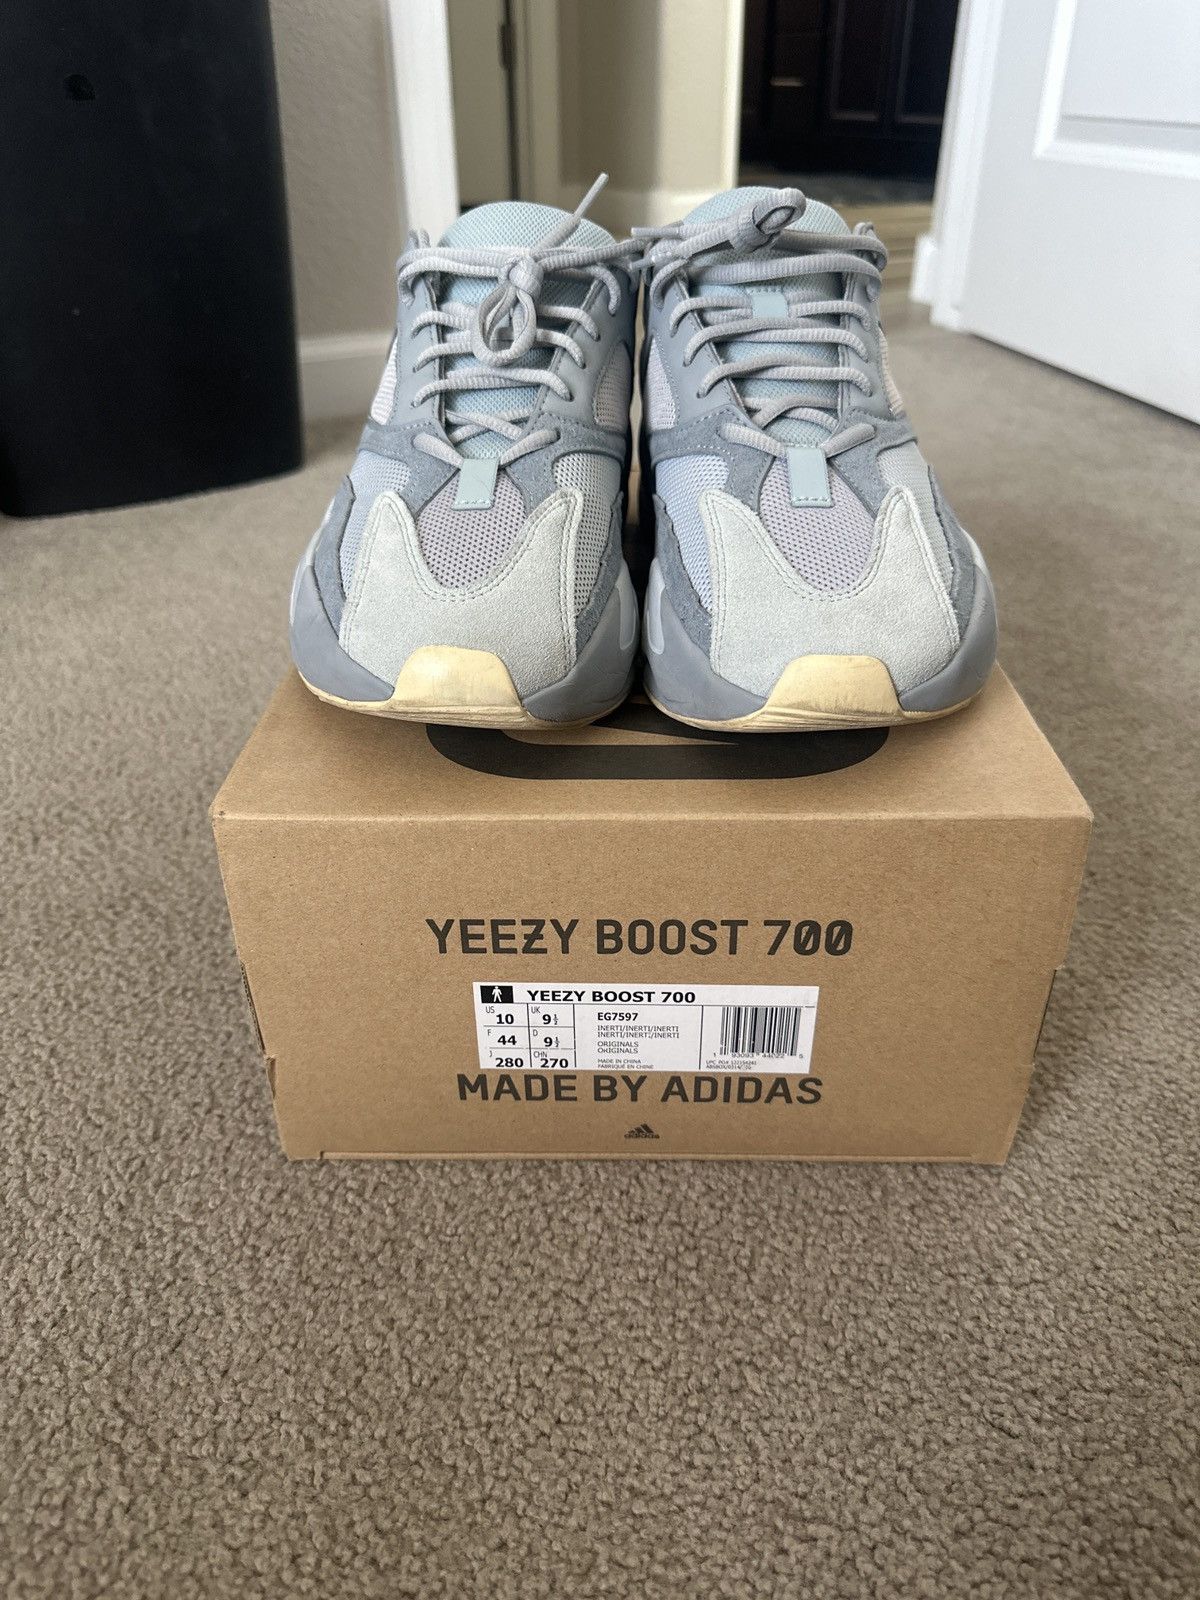 Adidas Yeezy Boost 700 “Inertia” | Grailed